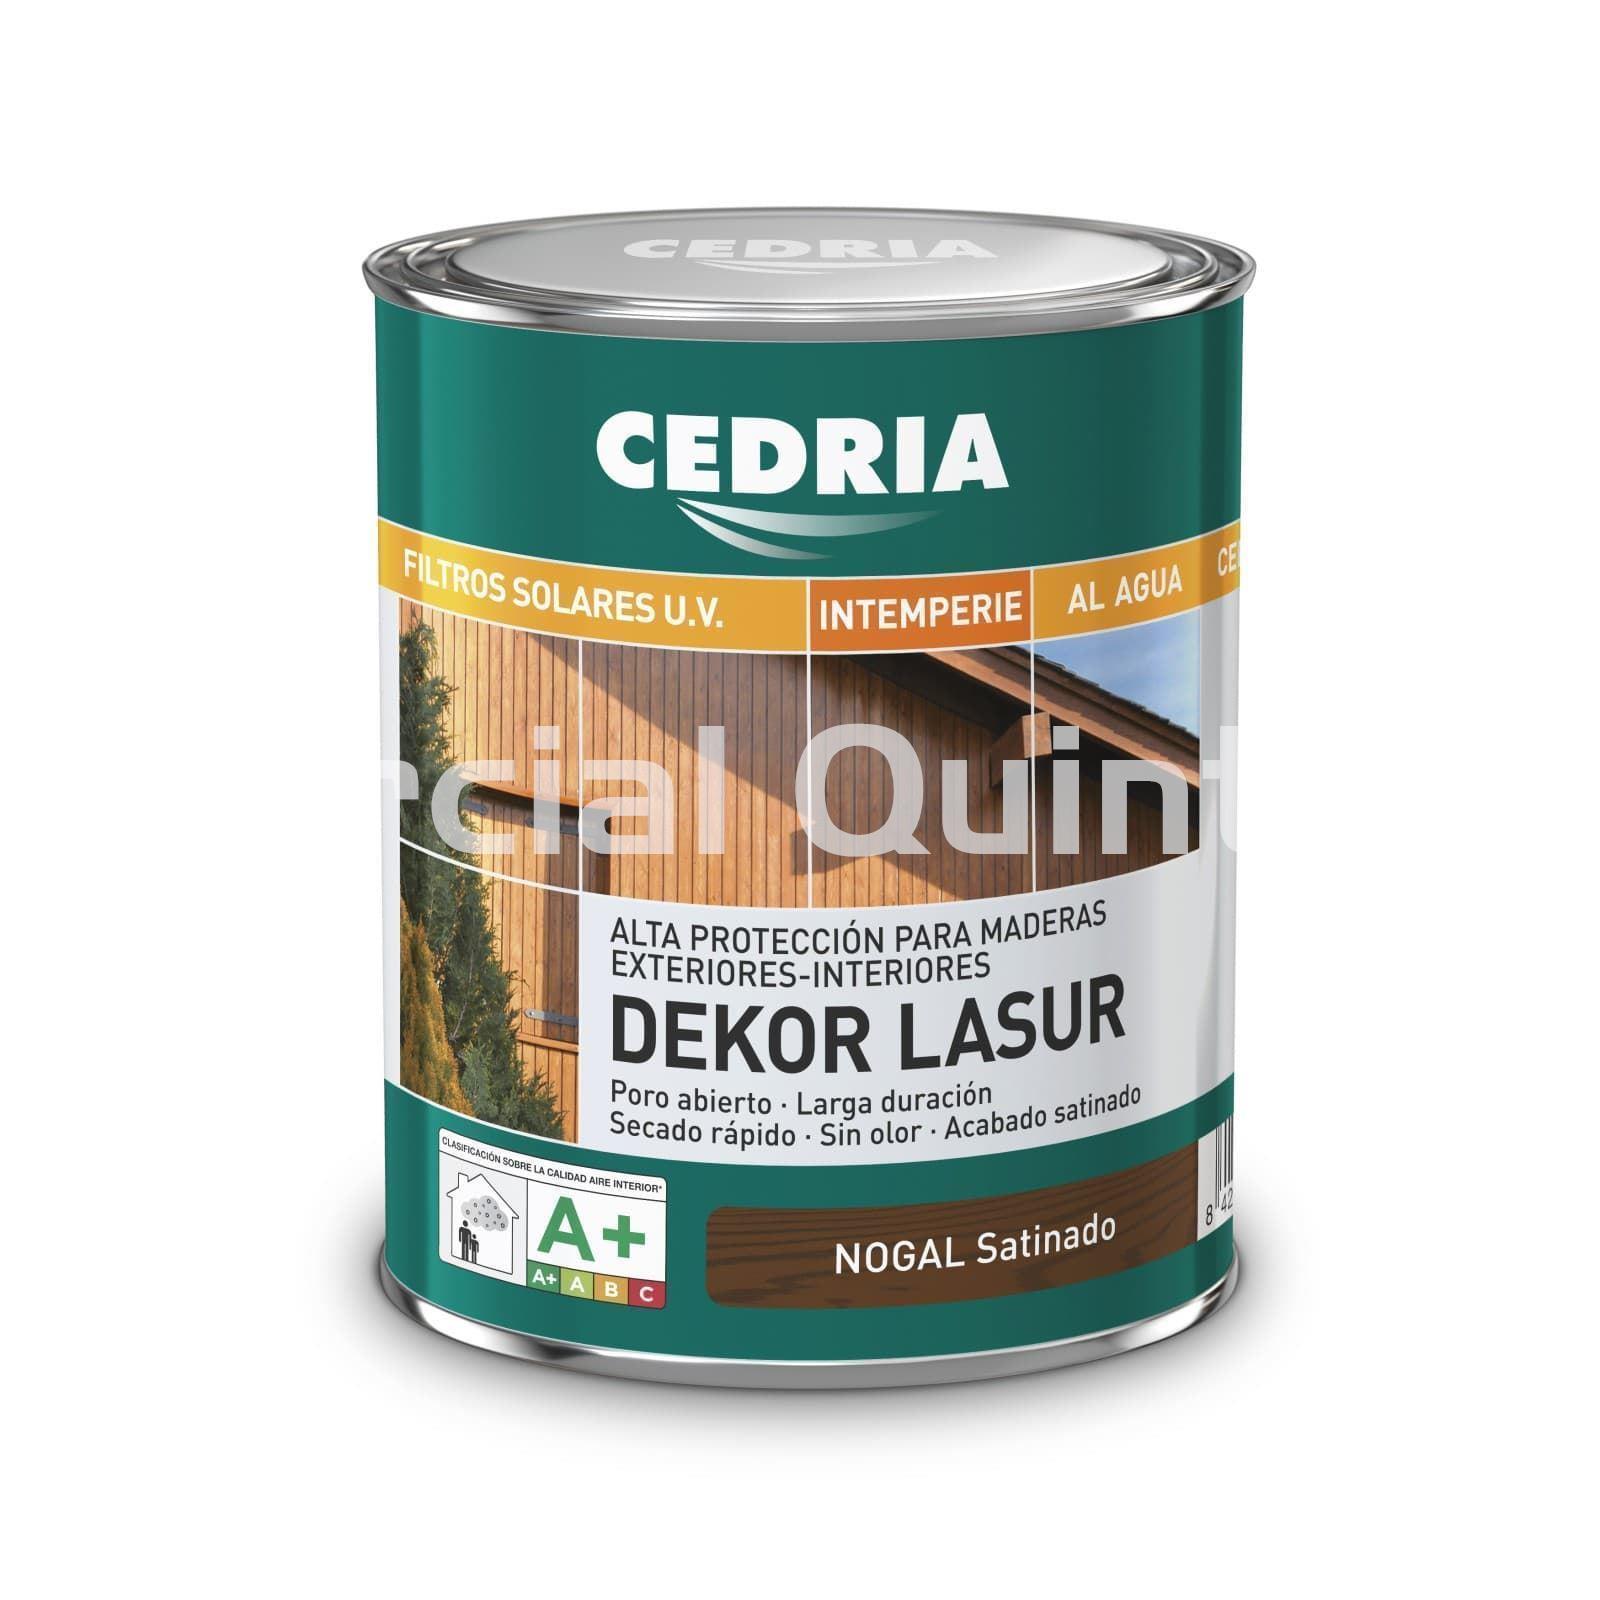 CEDRIA Dekor-Lasur - Imagen 1